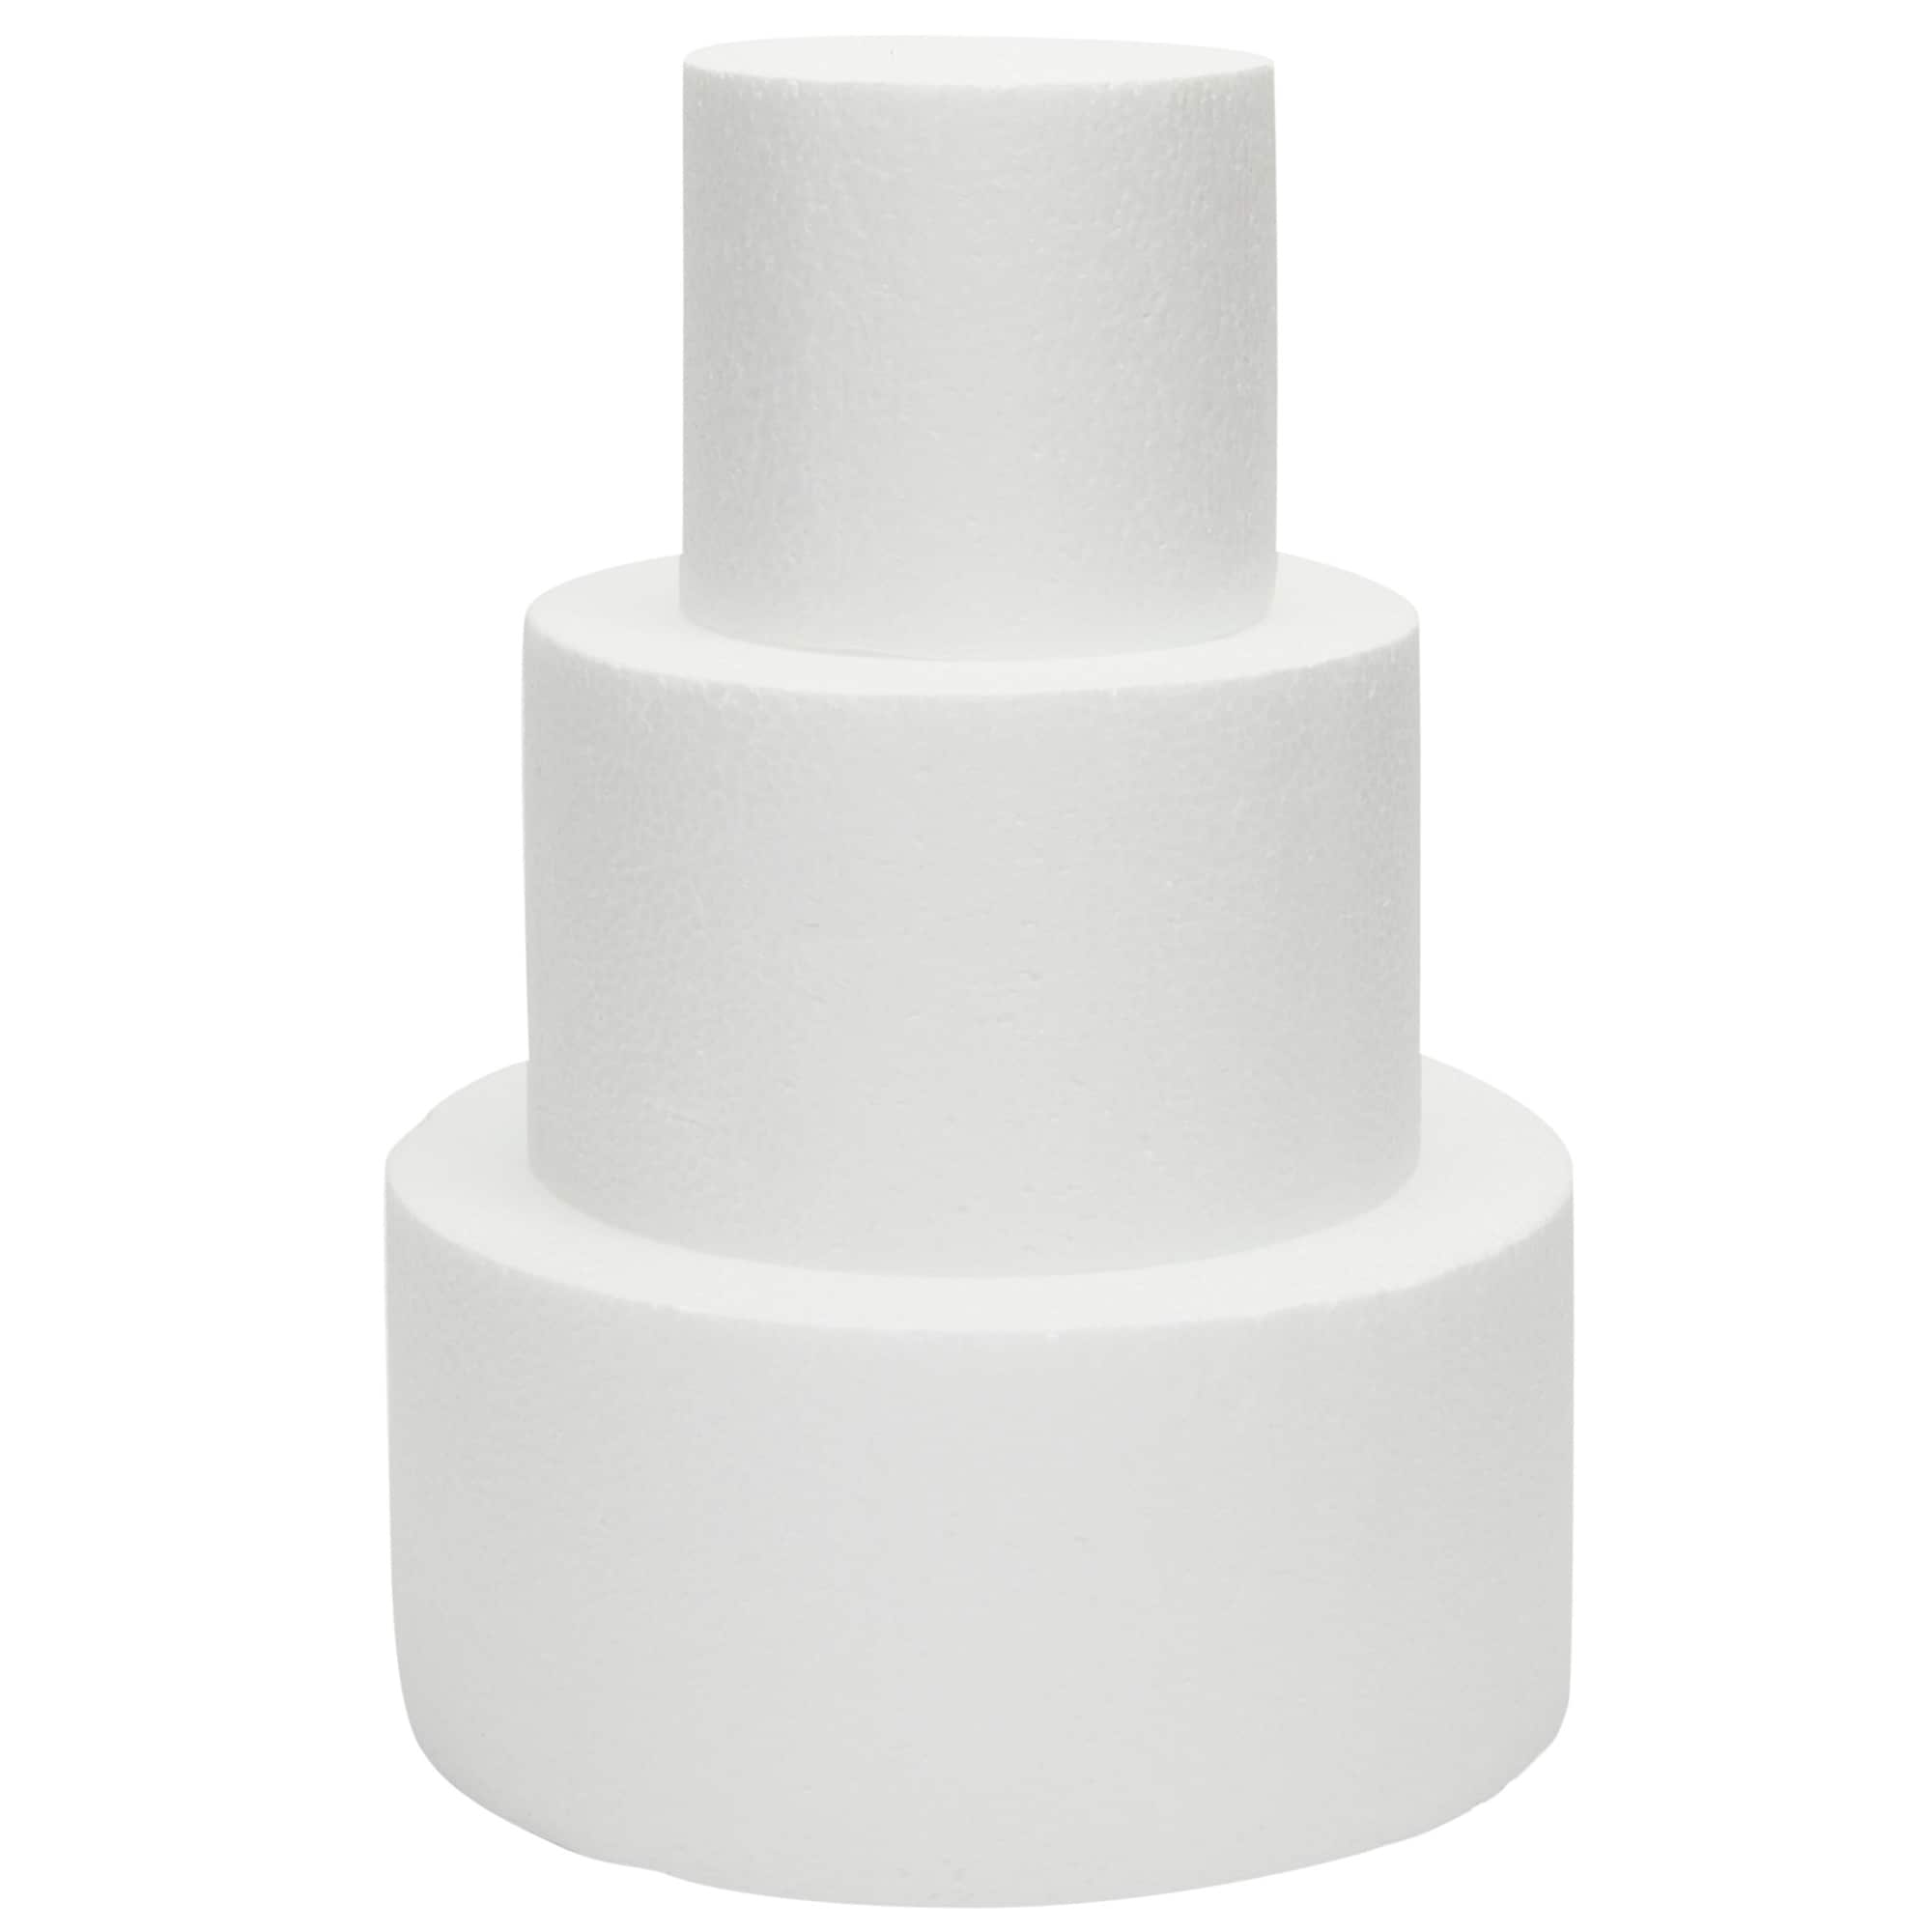 Round Foam Cake Dummy 4 Inch x 12 Inch Circle Dummy Cake Set for Wedding